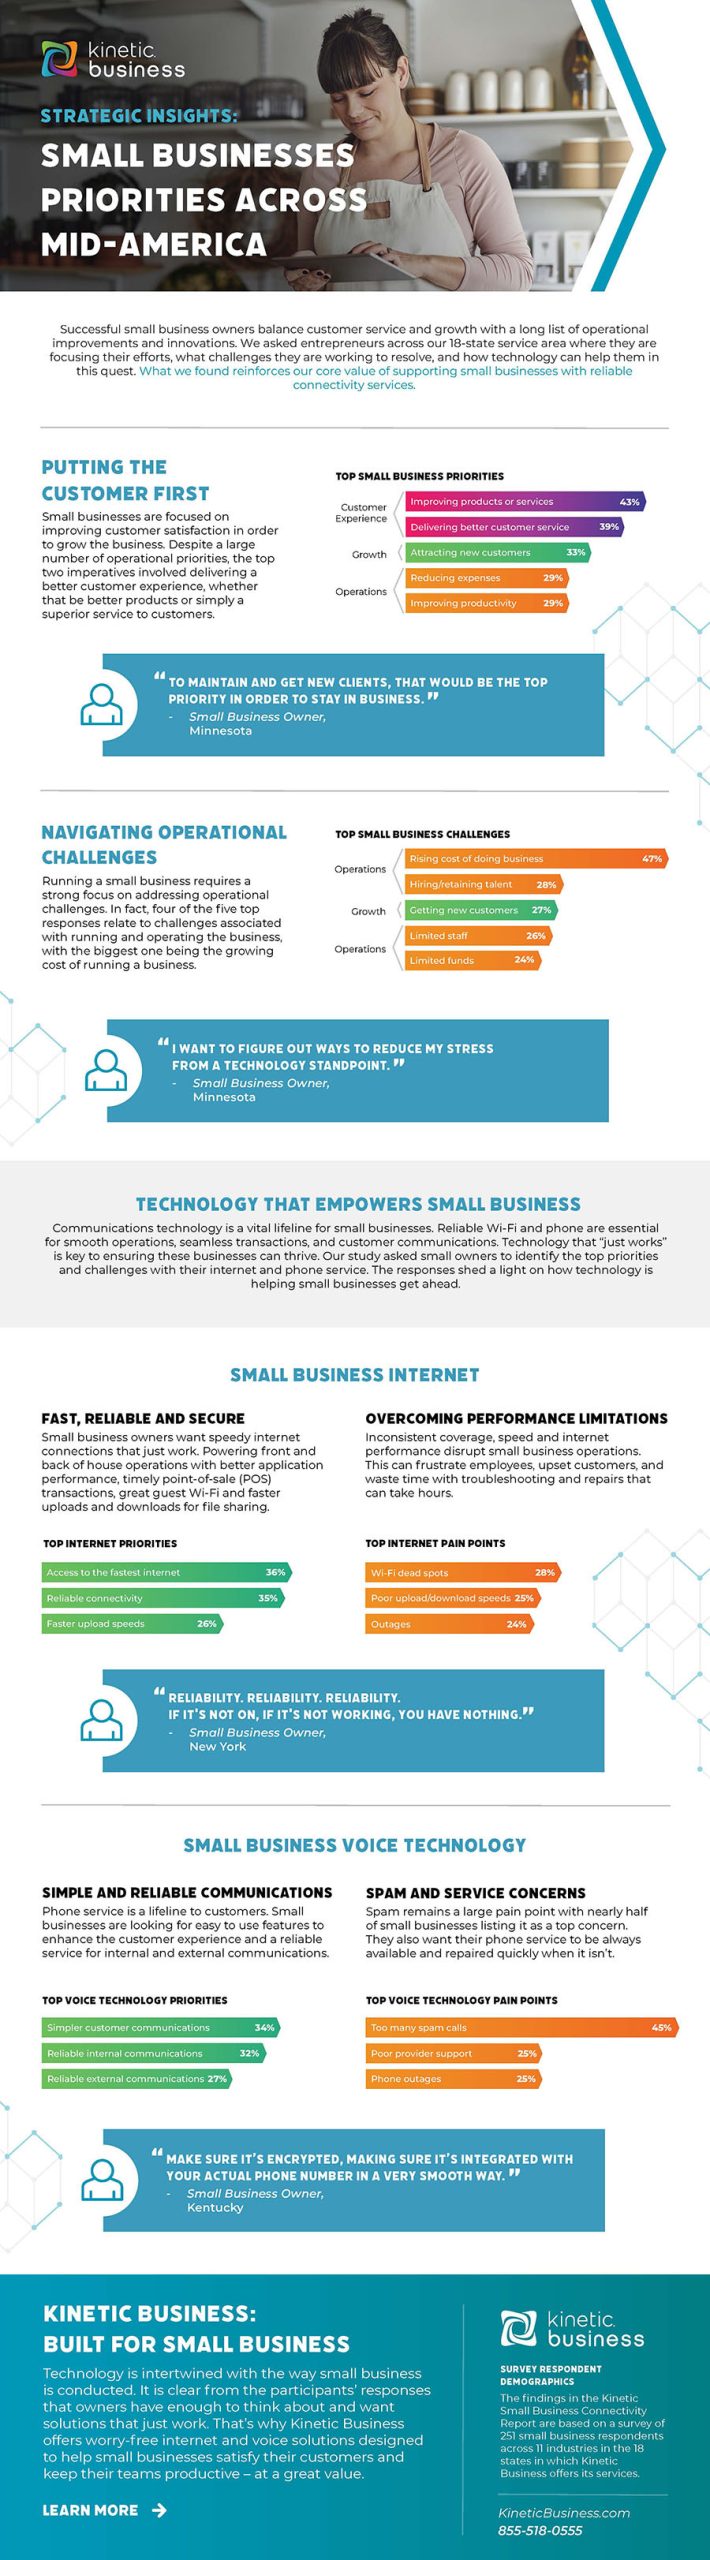 Small businesses priorities across mid-America